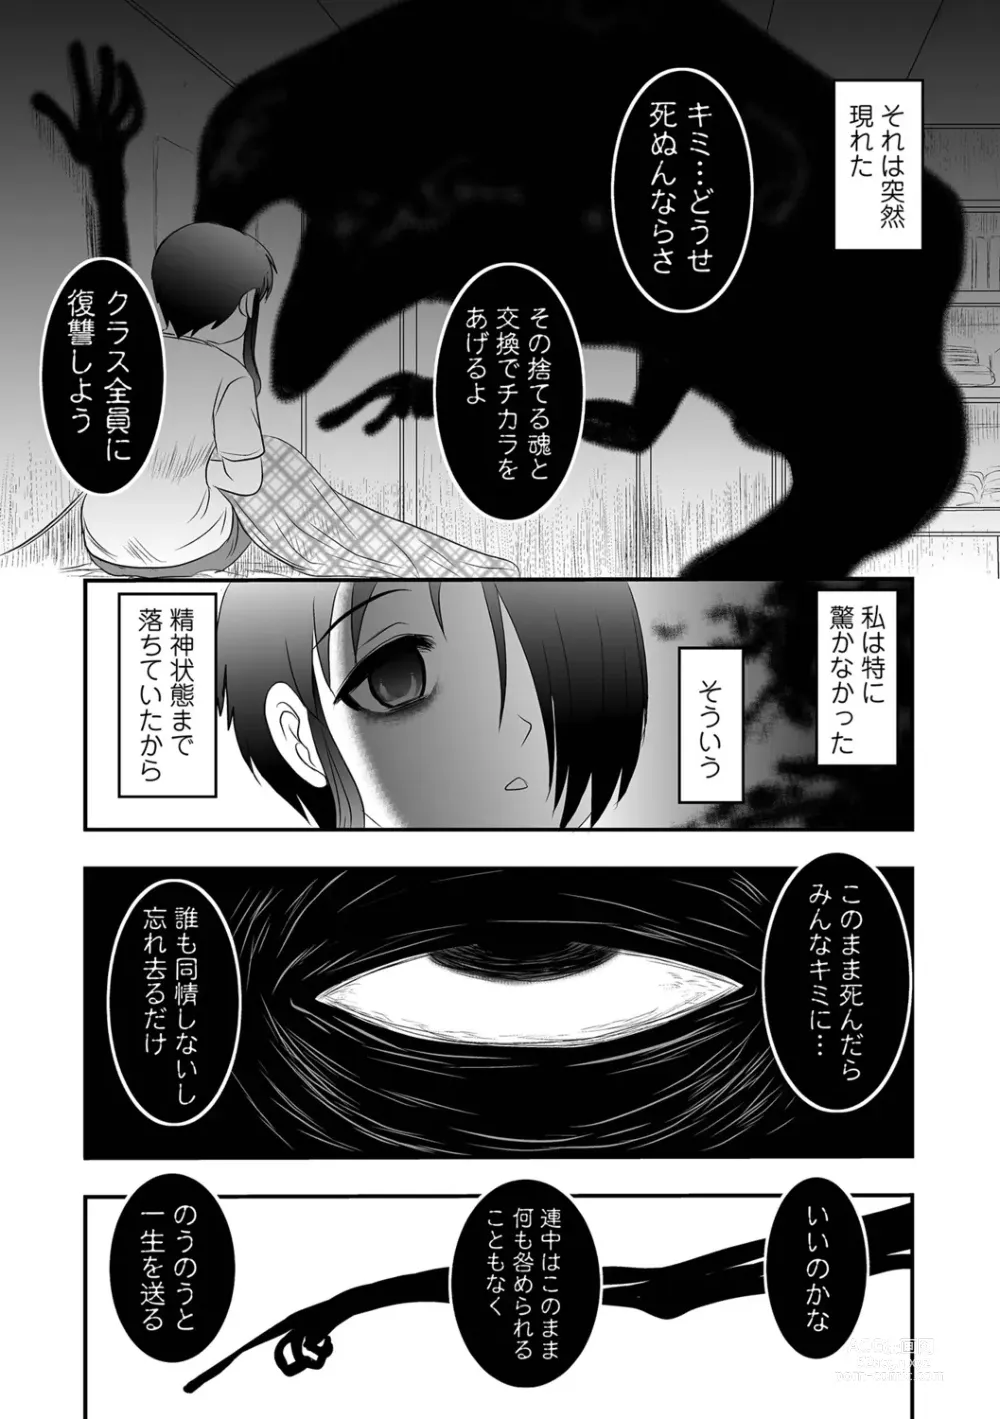 Page 6 of manga Ryona King Vol.19